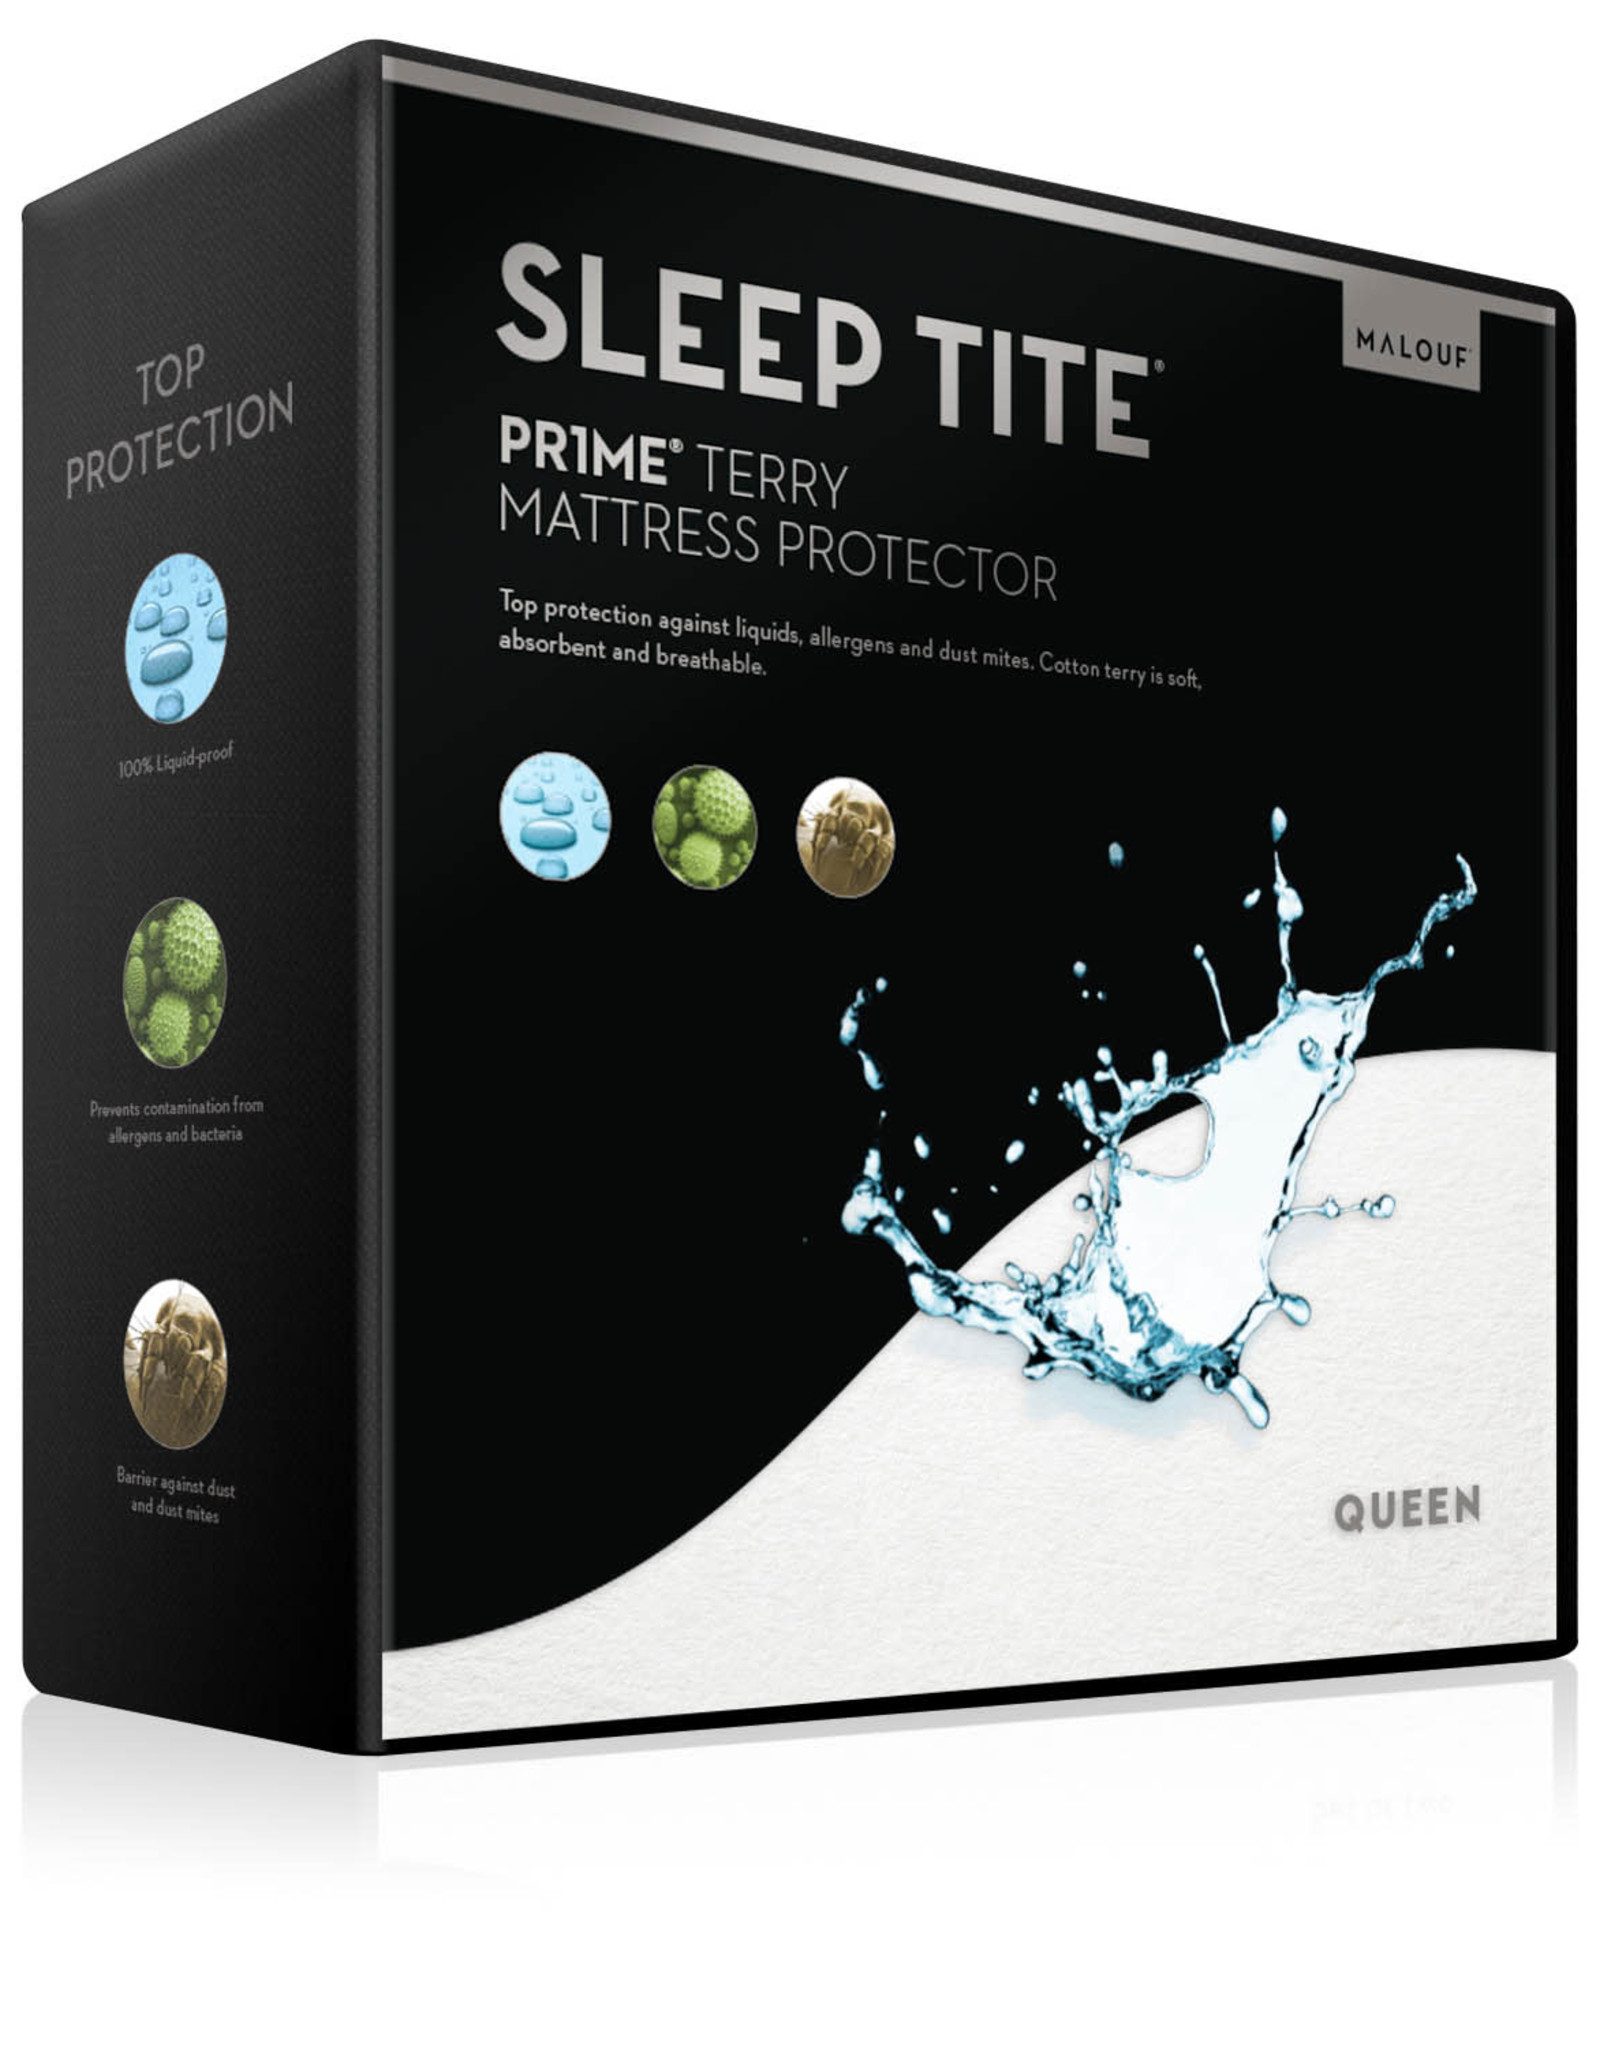 Malouf Mattress Protector Sleep Tite